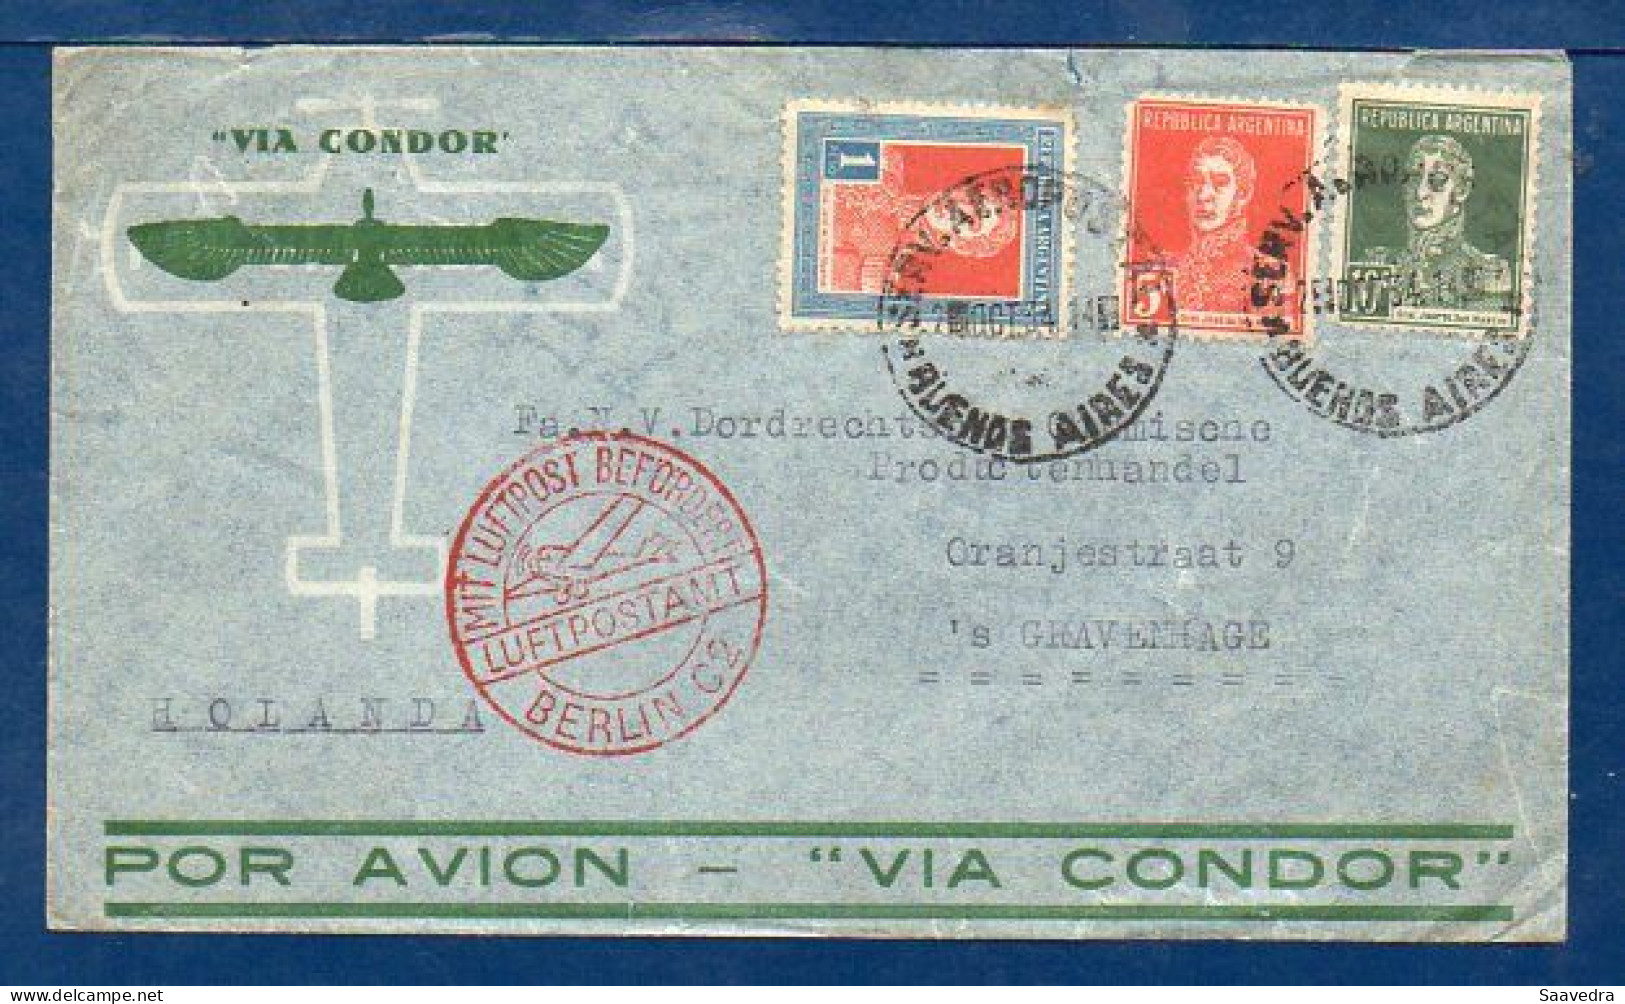 Argentina To Netherland, 1935, Via ZEPPELIN Flight G-409, SEE DESCRIPTION   (050) - Luftpost